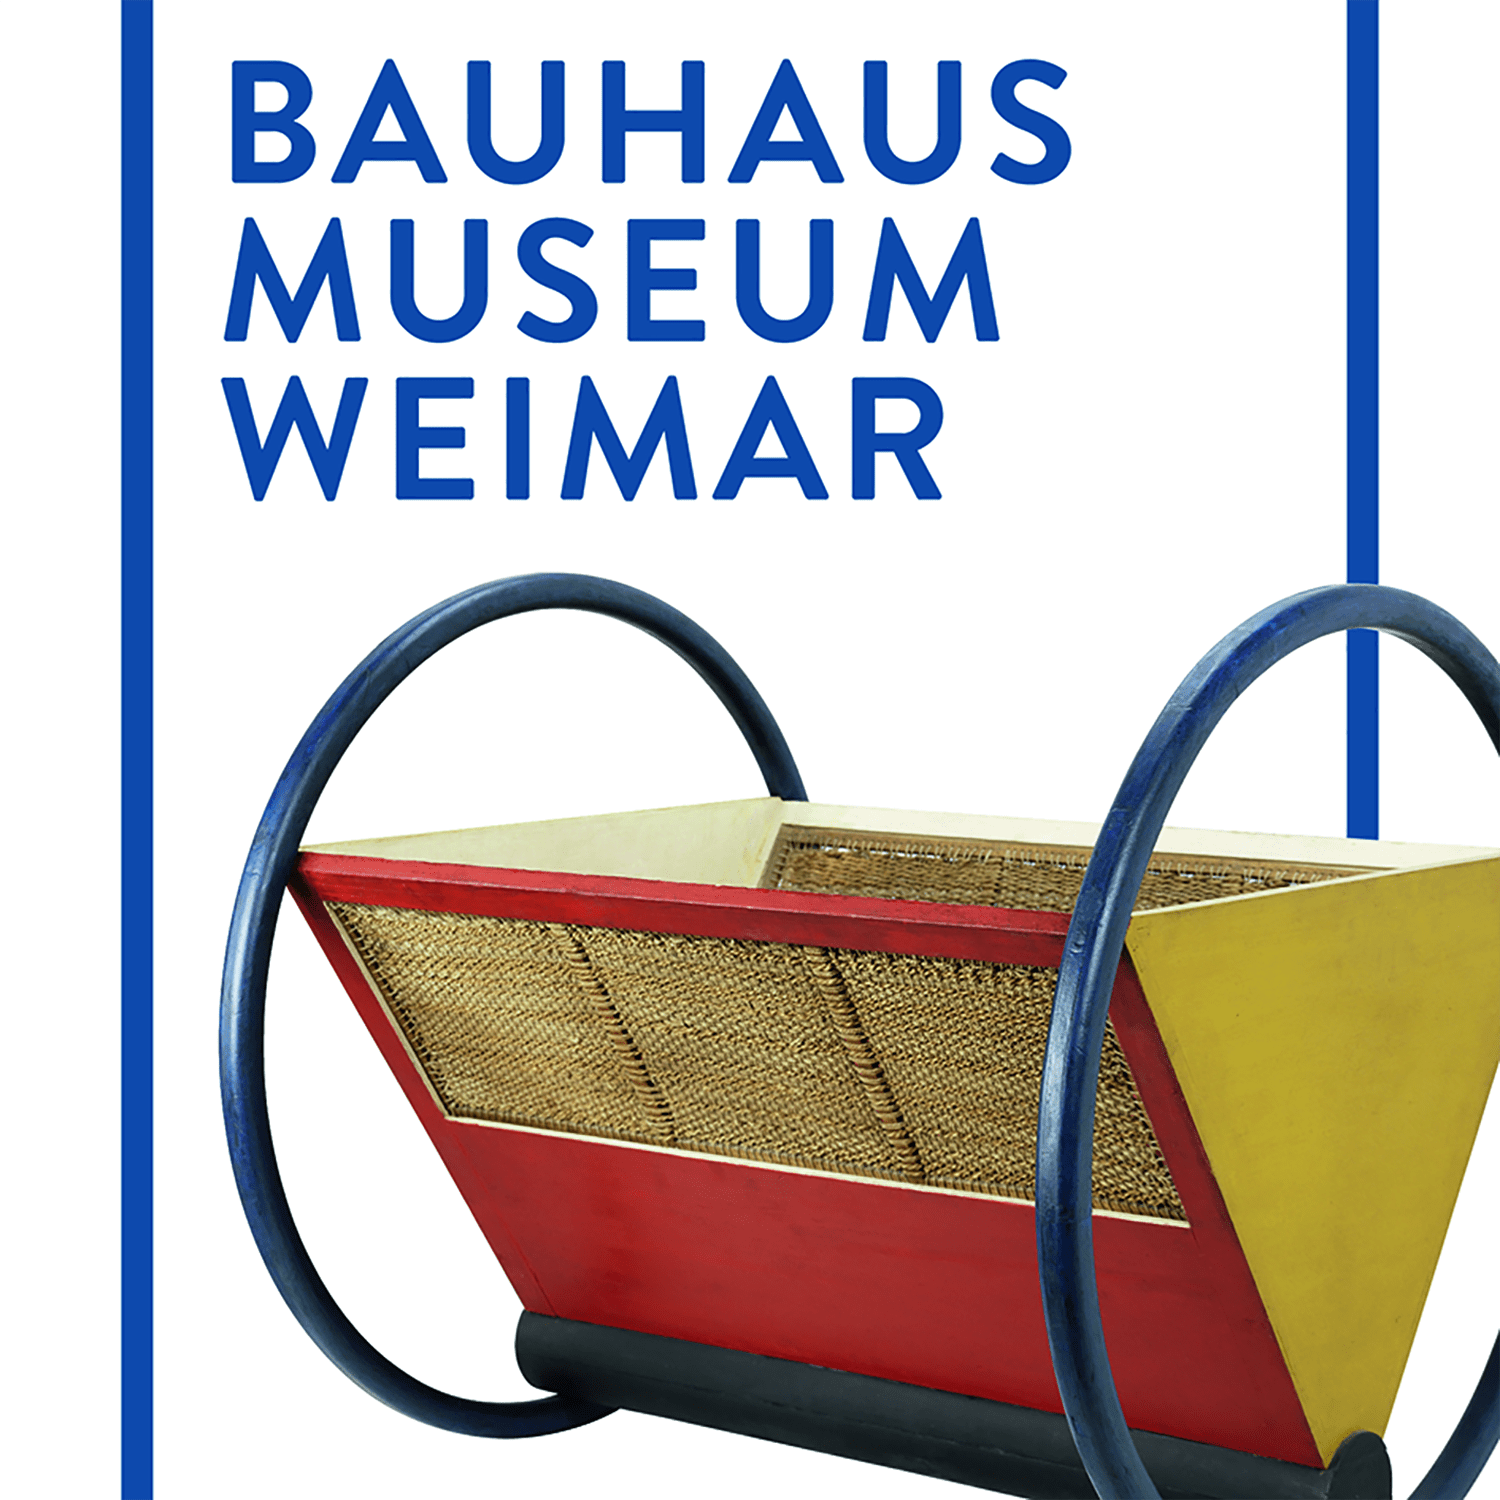 Bauhaus Museum Weimar की तस्वीर